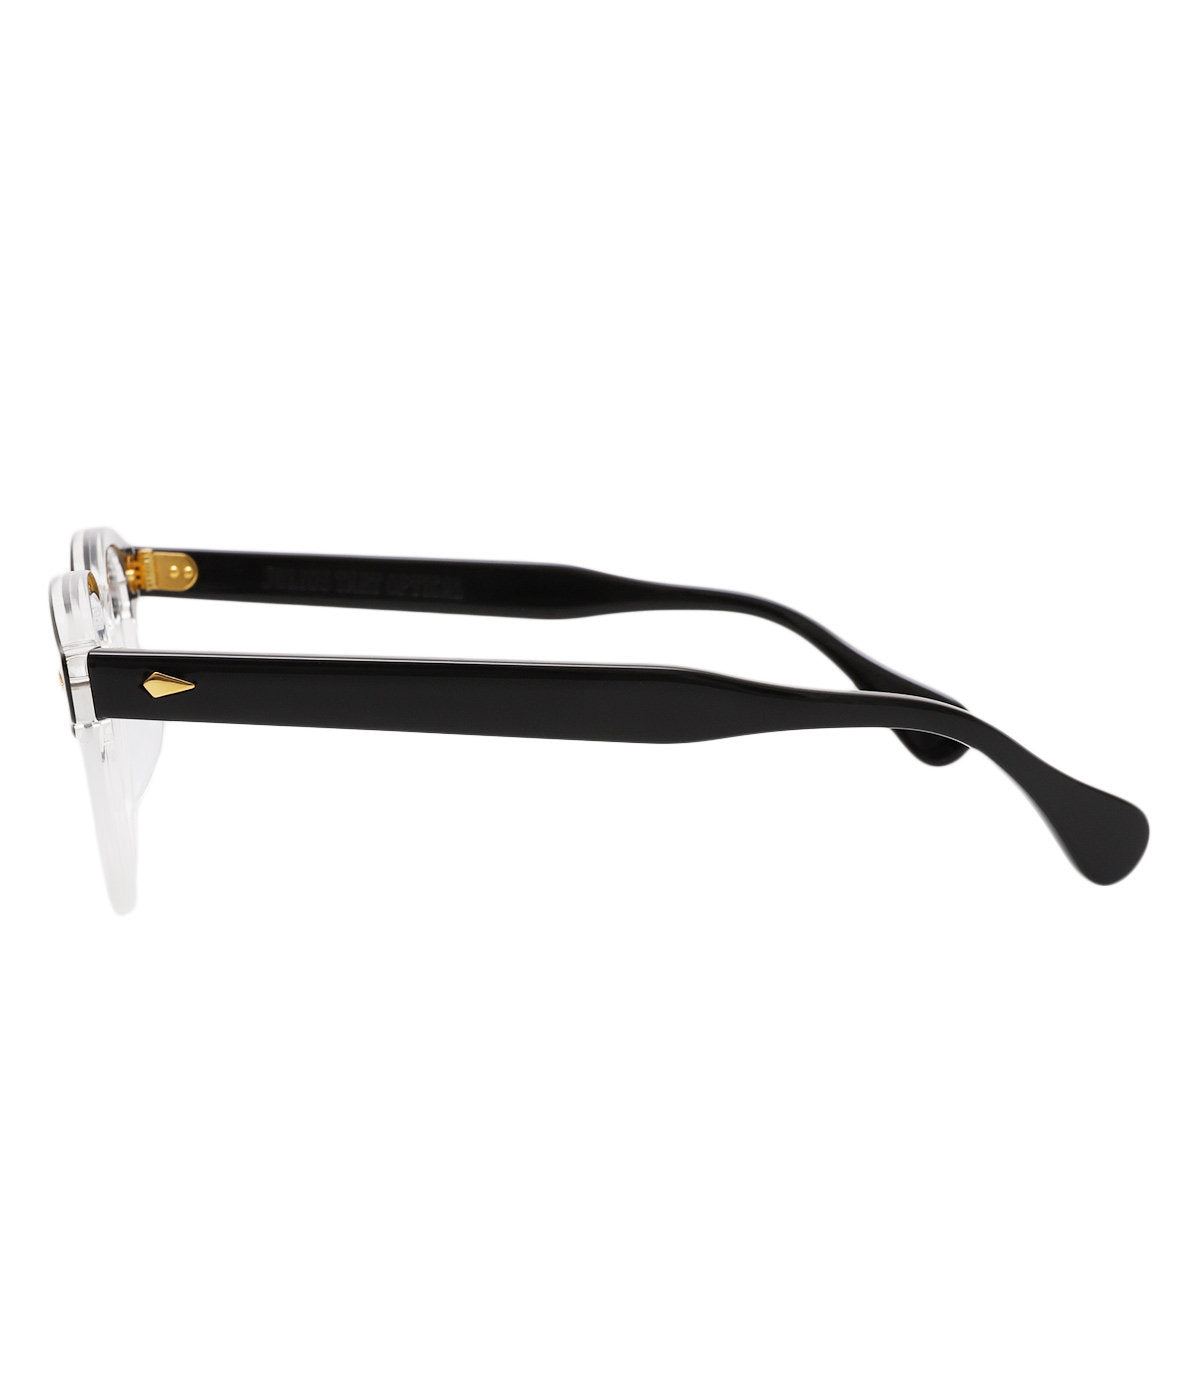 JULIUS TART OPTICAL AR Gold Edition Eyeglass Frame Black Clear Brow